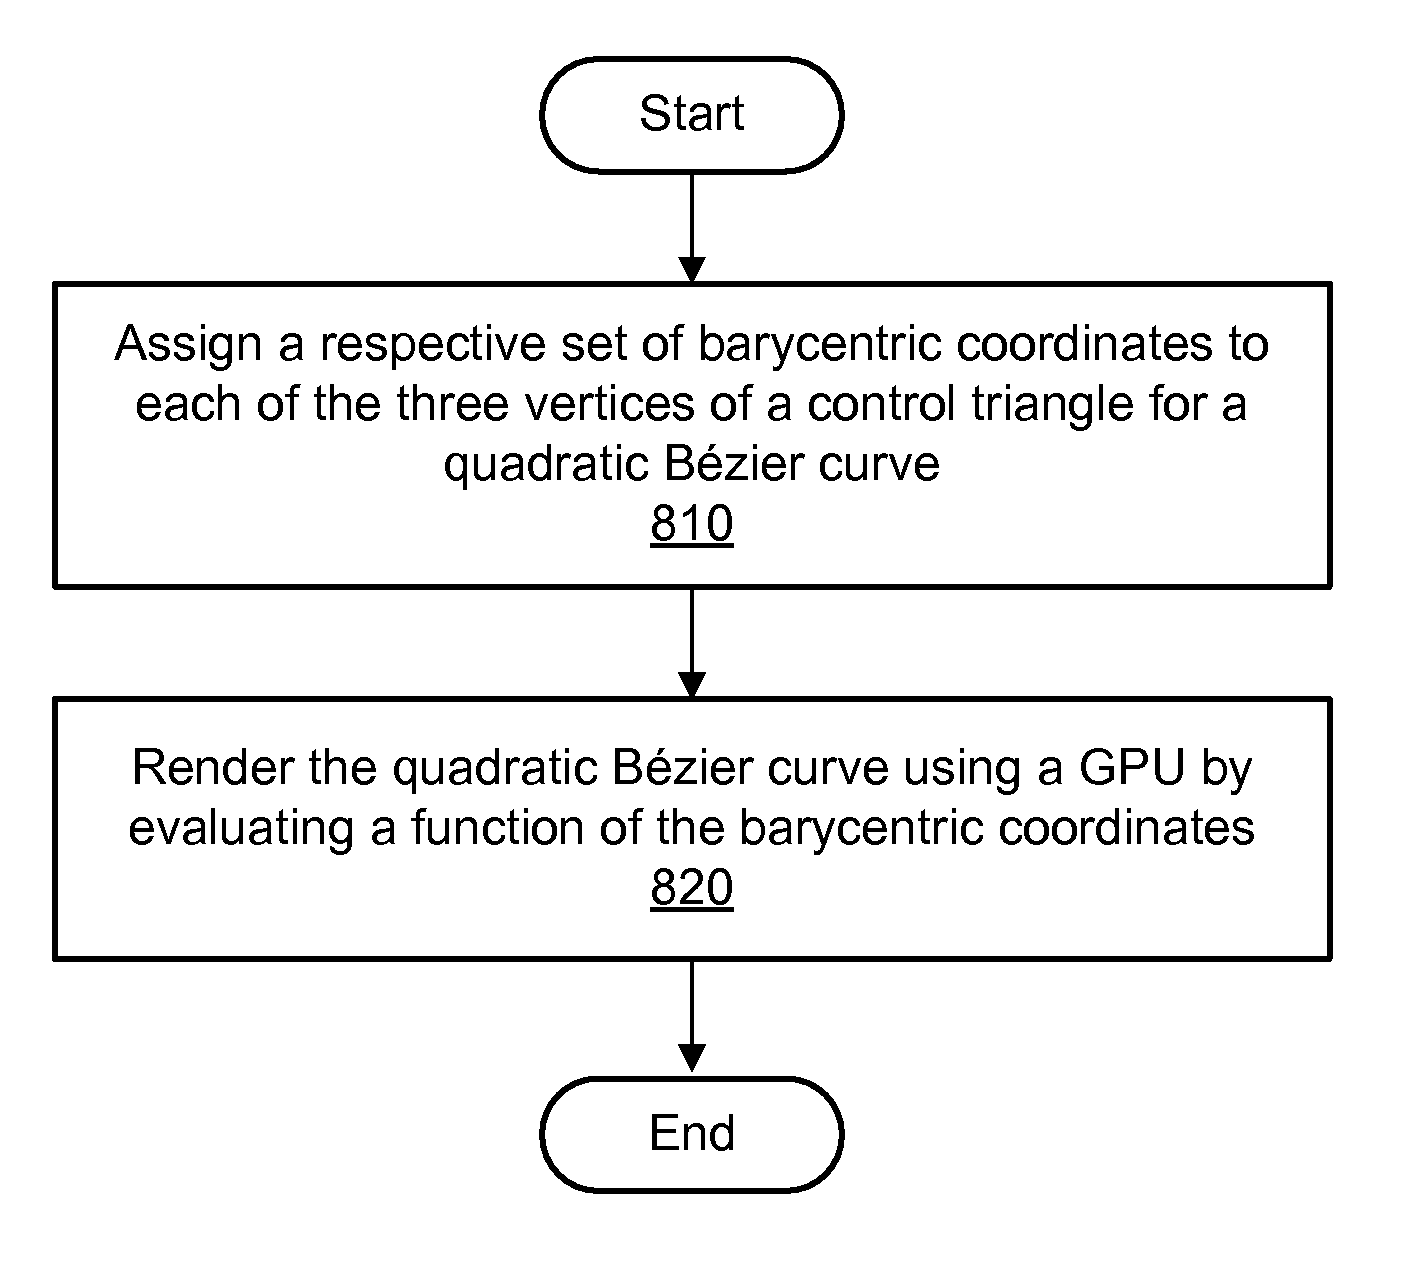 Rendering rational quadratic Bézier curves on a GPU